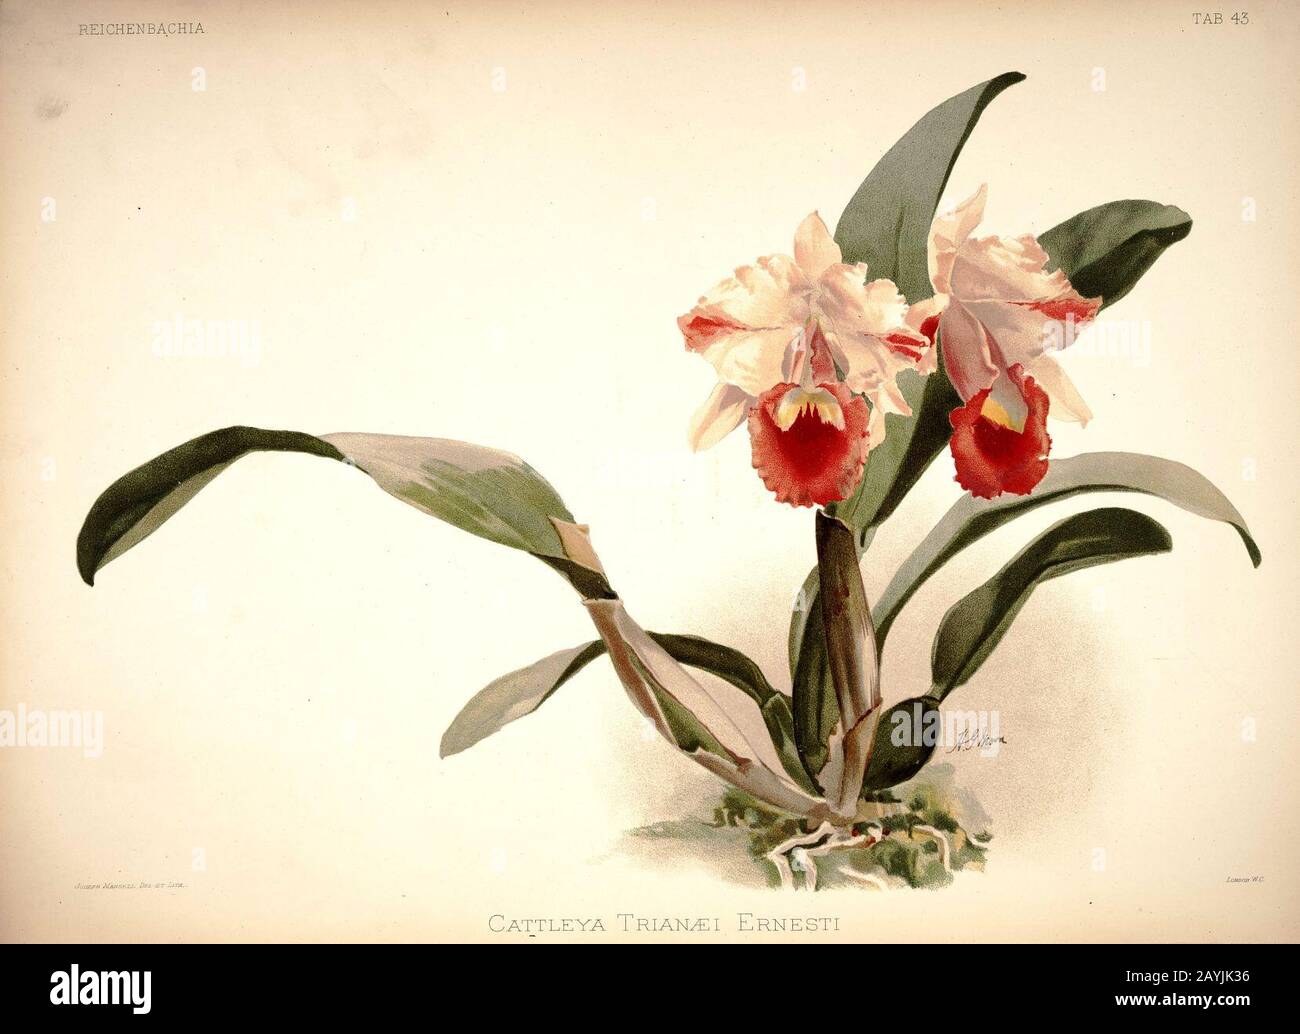 Frederick Sander - Reichenbachia I plate 43 (1888) - Cattleya trianae ernesti. Stock Photo